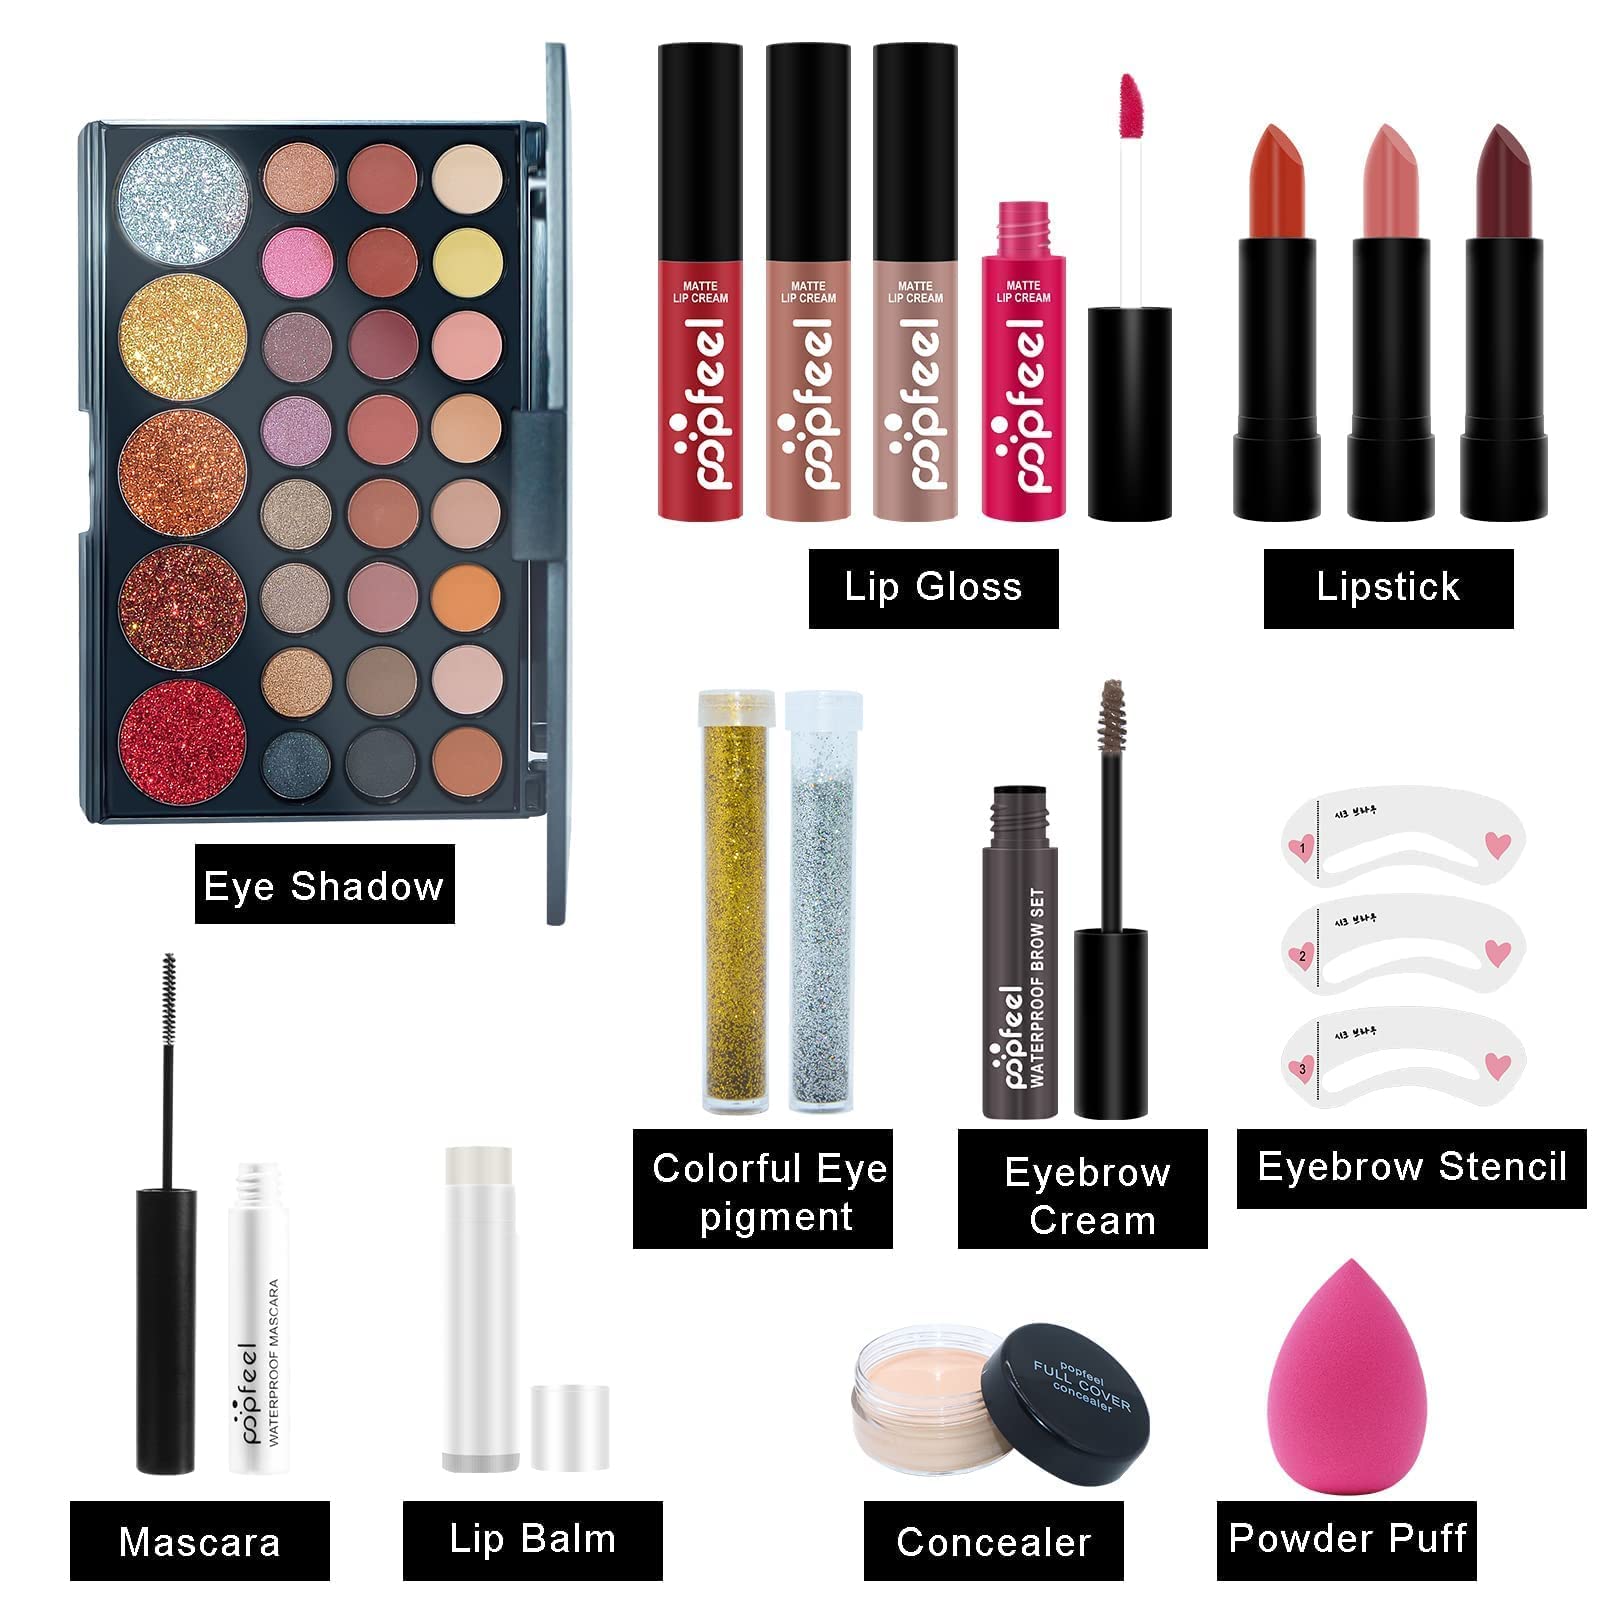 PHBUDE Makeup Kit for Women Full Kit, 27PCS All-in-one Makeup Gift Set, Include Eyeshadow Palette, Lip Gloss Set, Makeup Brush Set, Fou